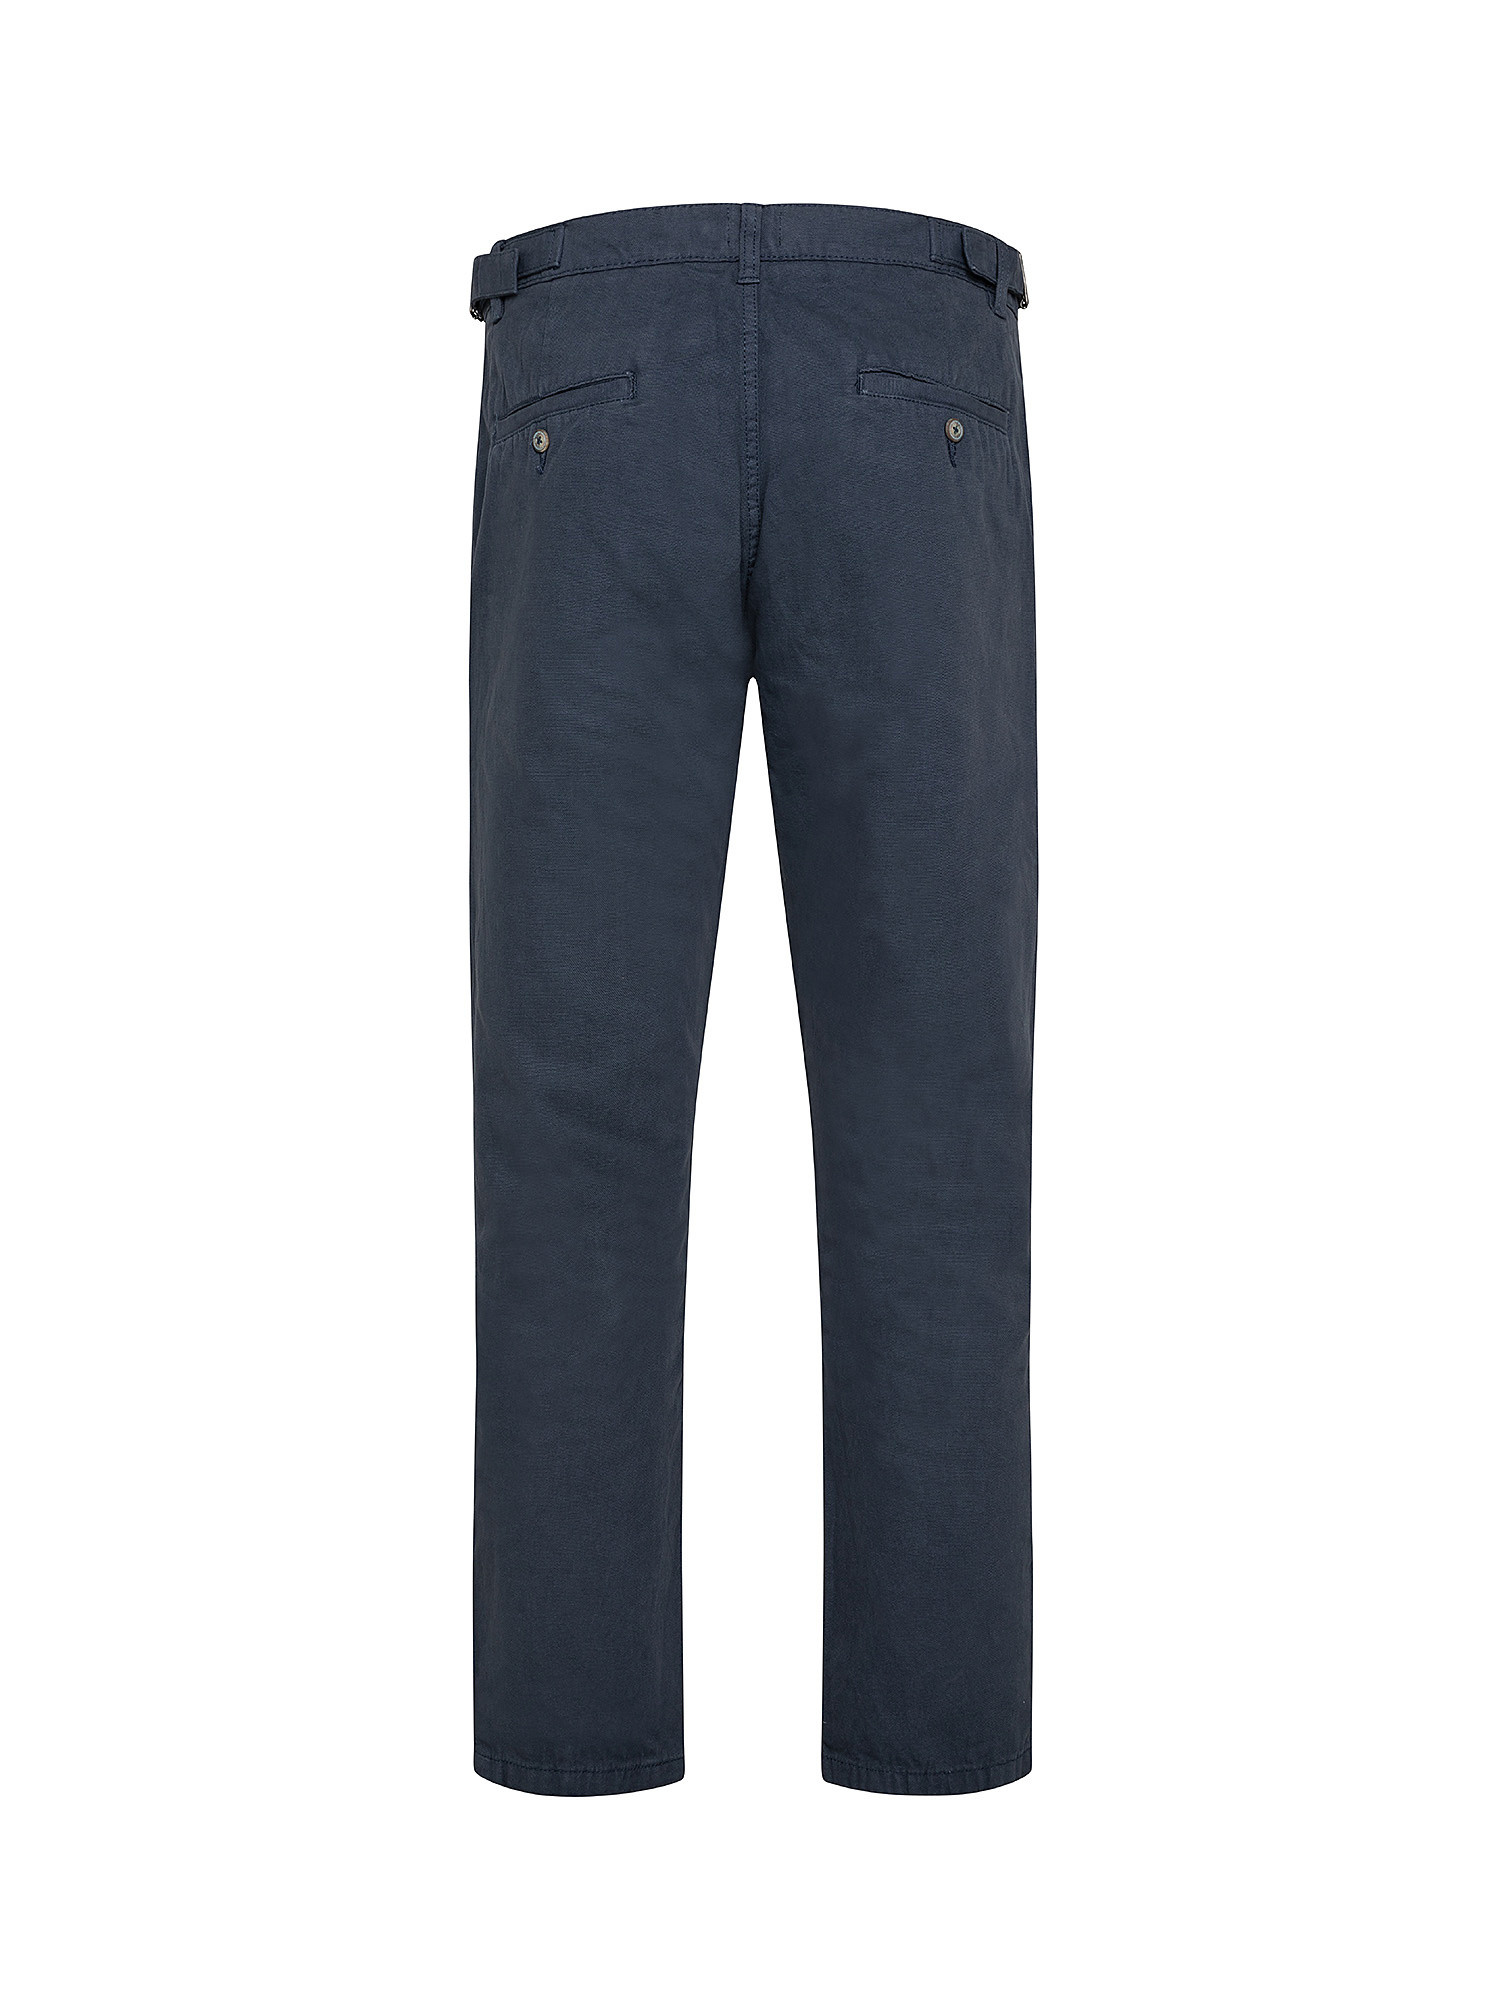 Pantalone chinos in cotone, Blu, large image number 1